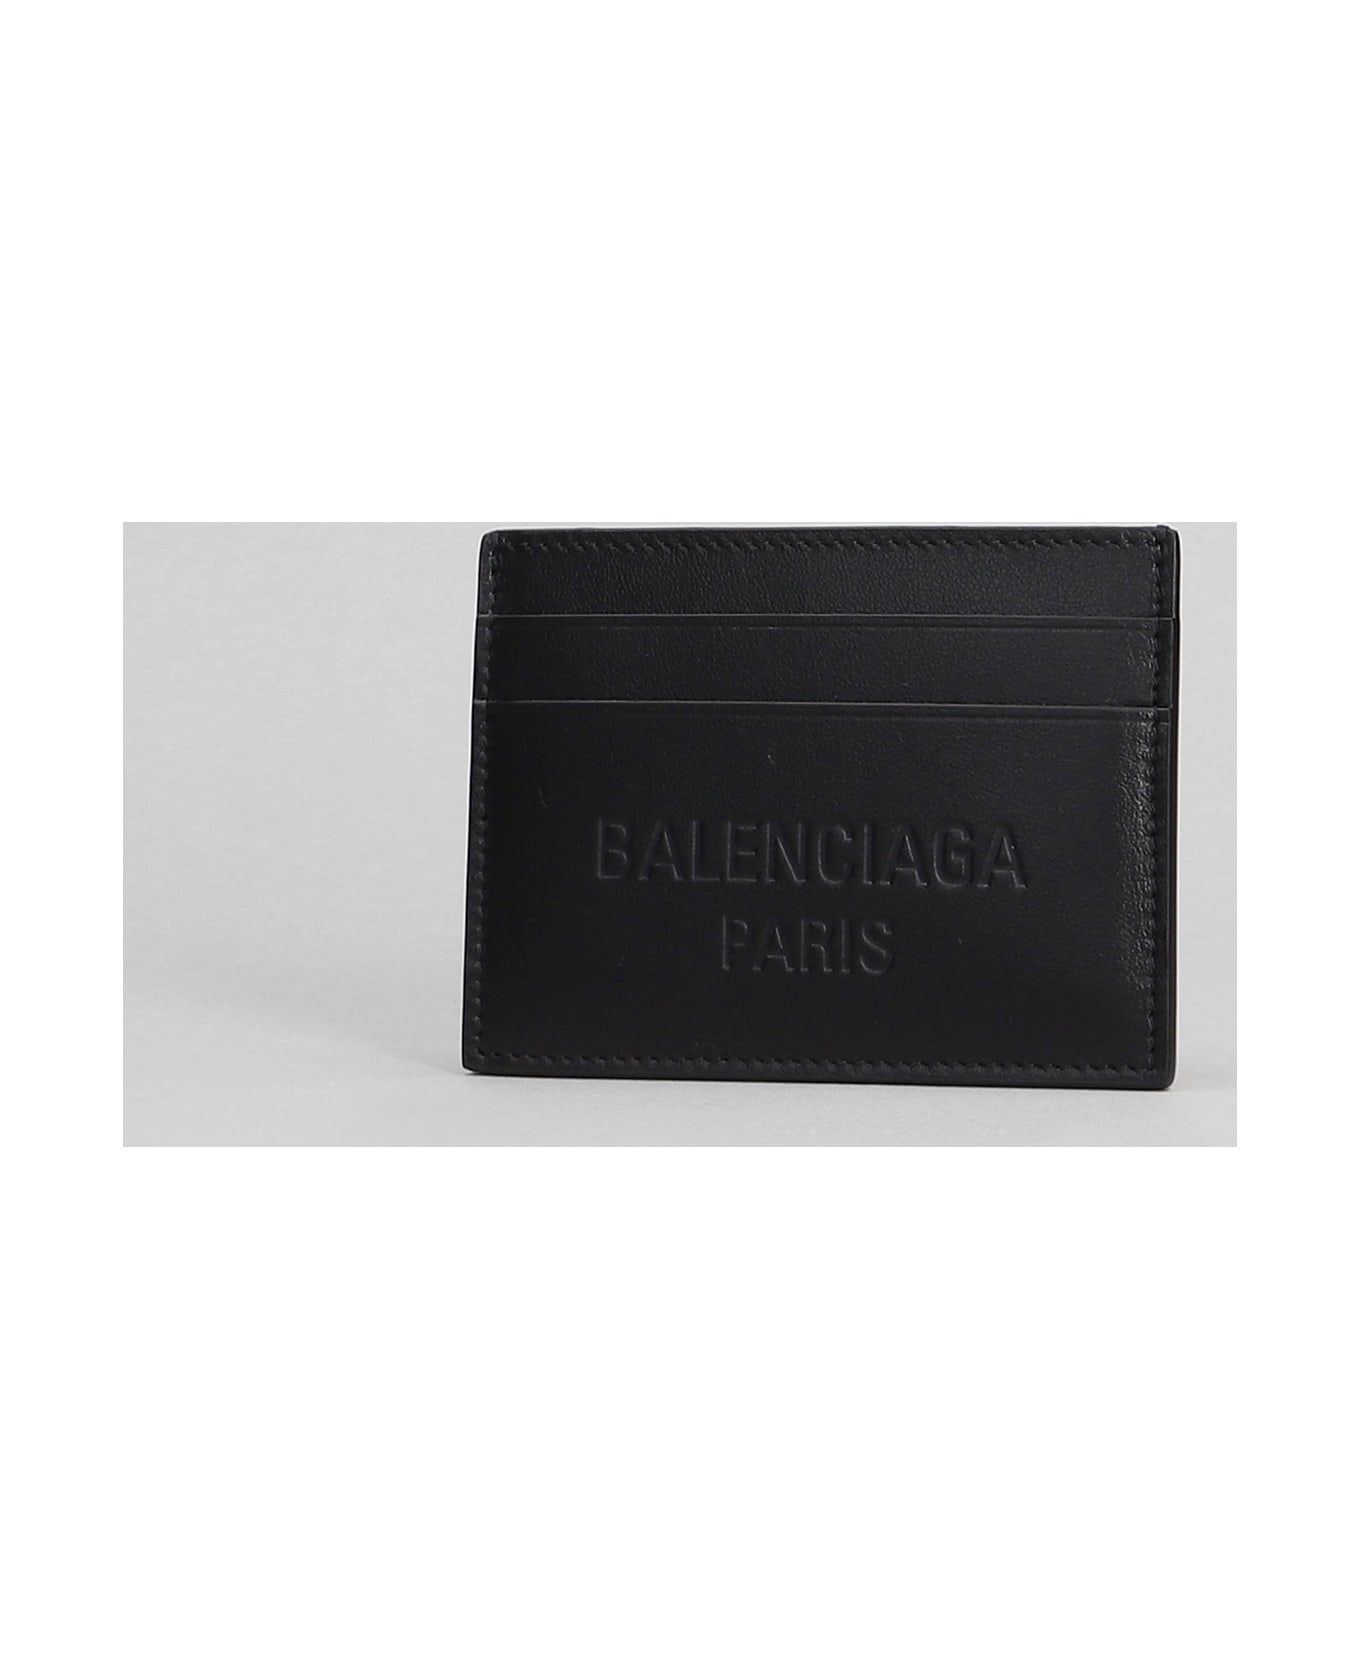 Balenciaga Wallet In Black Leather - black